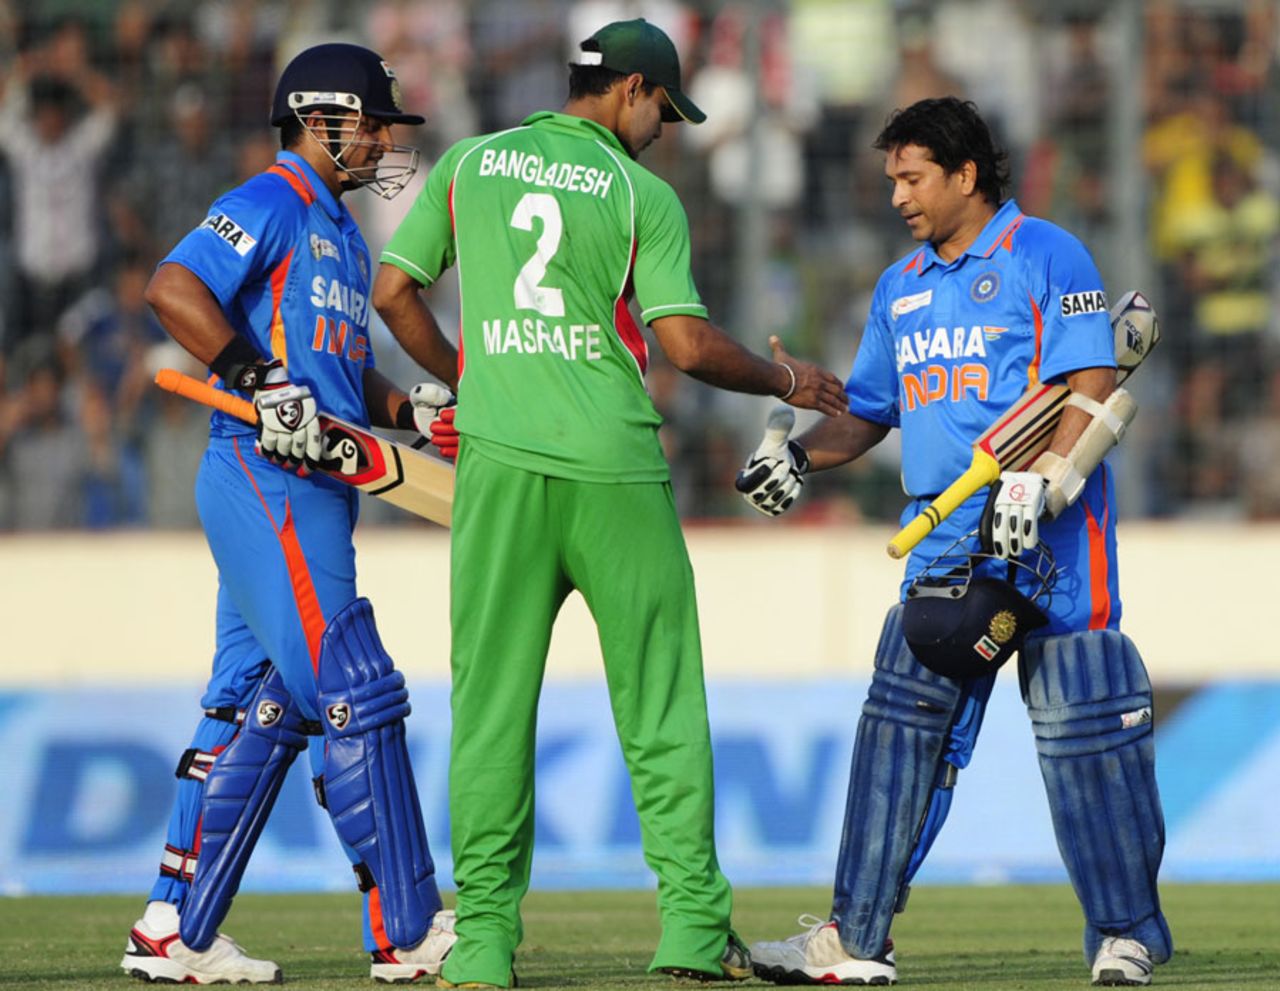 Sachin Tendulkar is congratulated by Mashrafe Mortaza on his 100th hundred, Bangladesh v India, Asia Cup, Mirpur, March 16, 2012